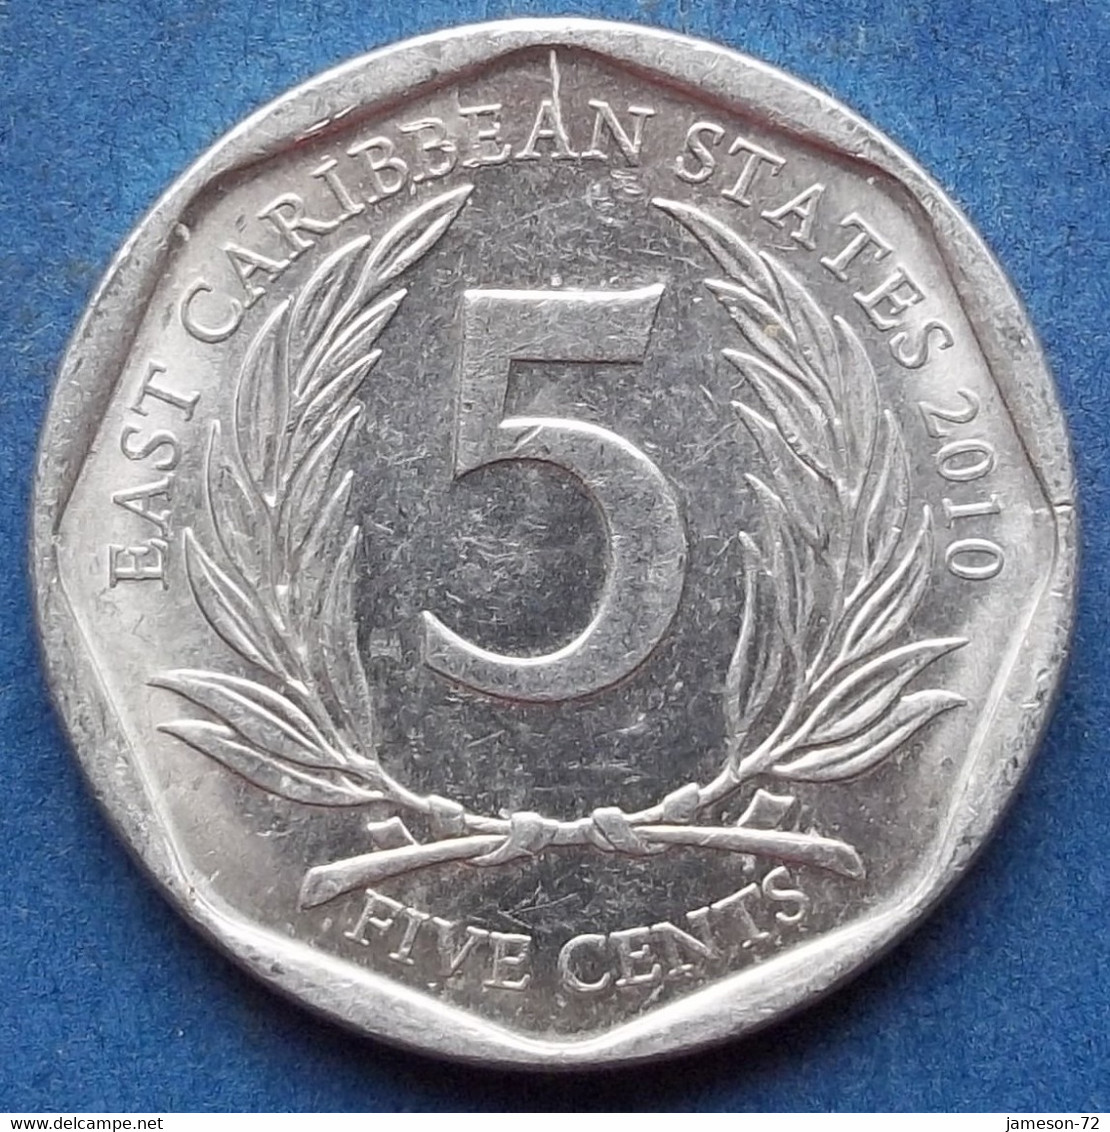 EAST CARIBBEAN STATES - 5 Cents 2010 KM# 36 Elizabeth II - Edelweiss Coins - Caraïbes Orientales (Etats Des)